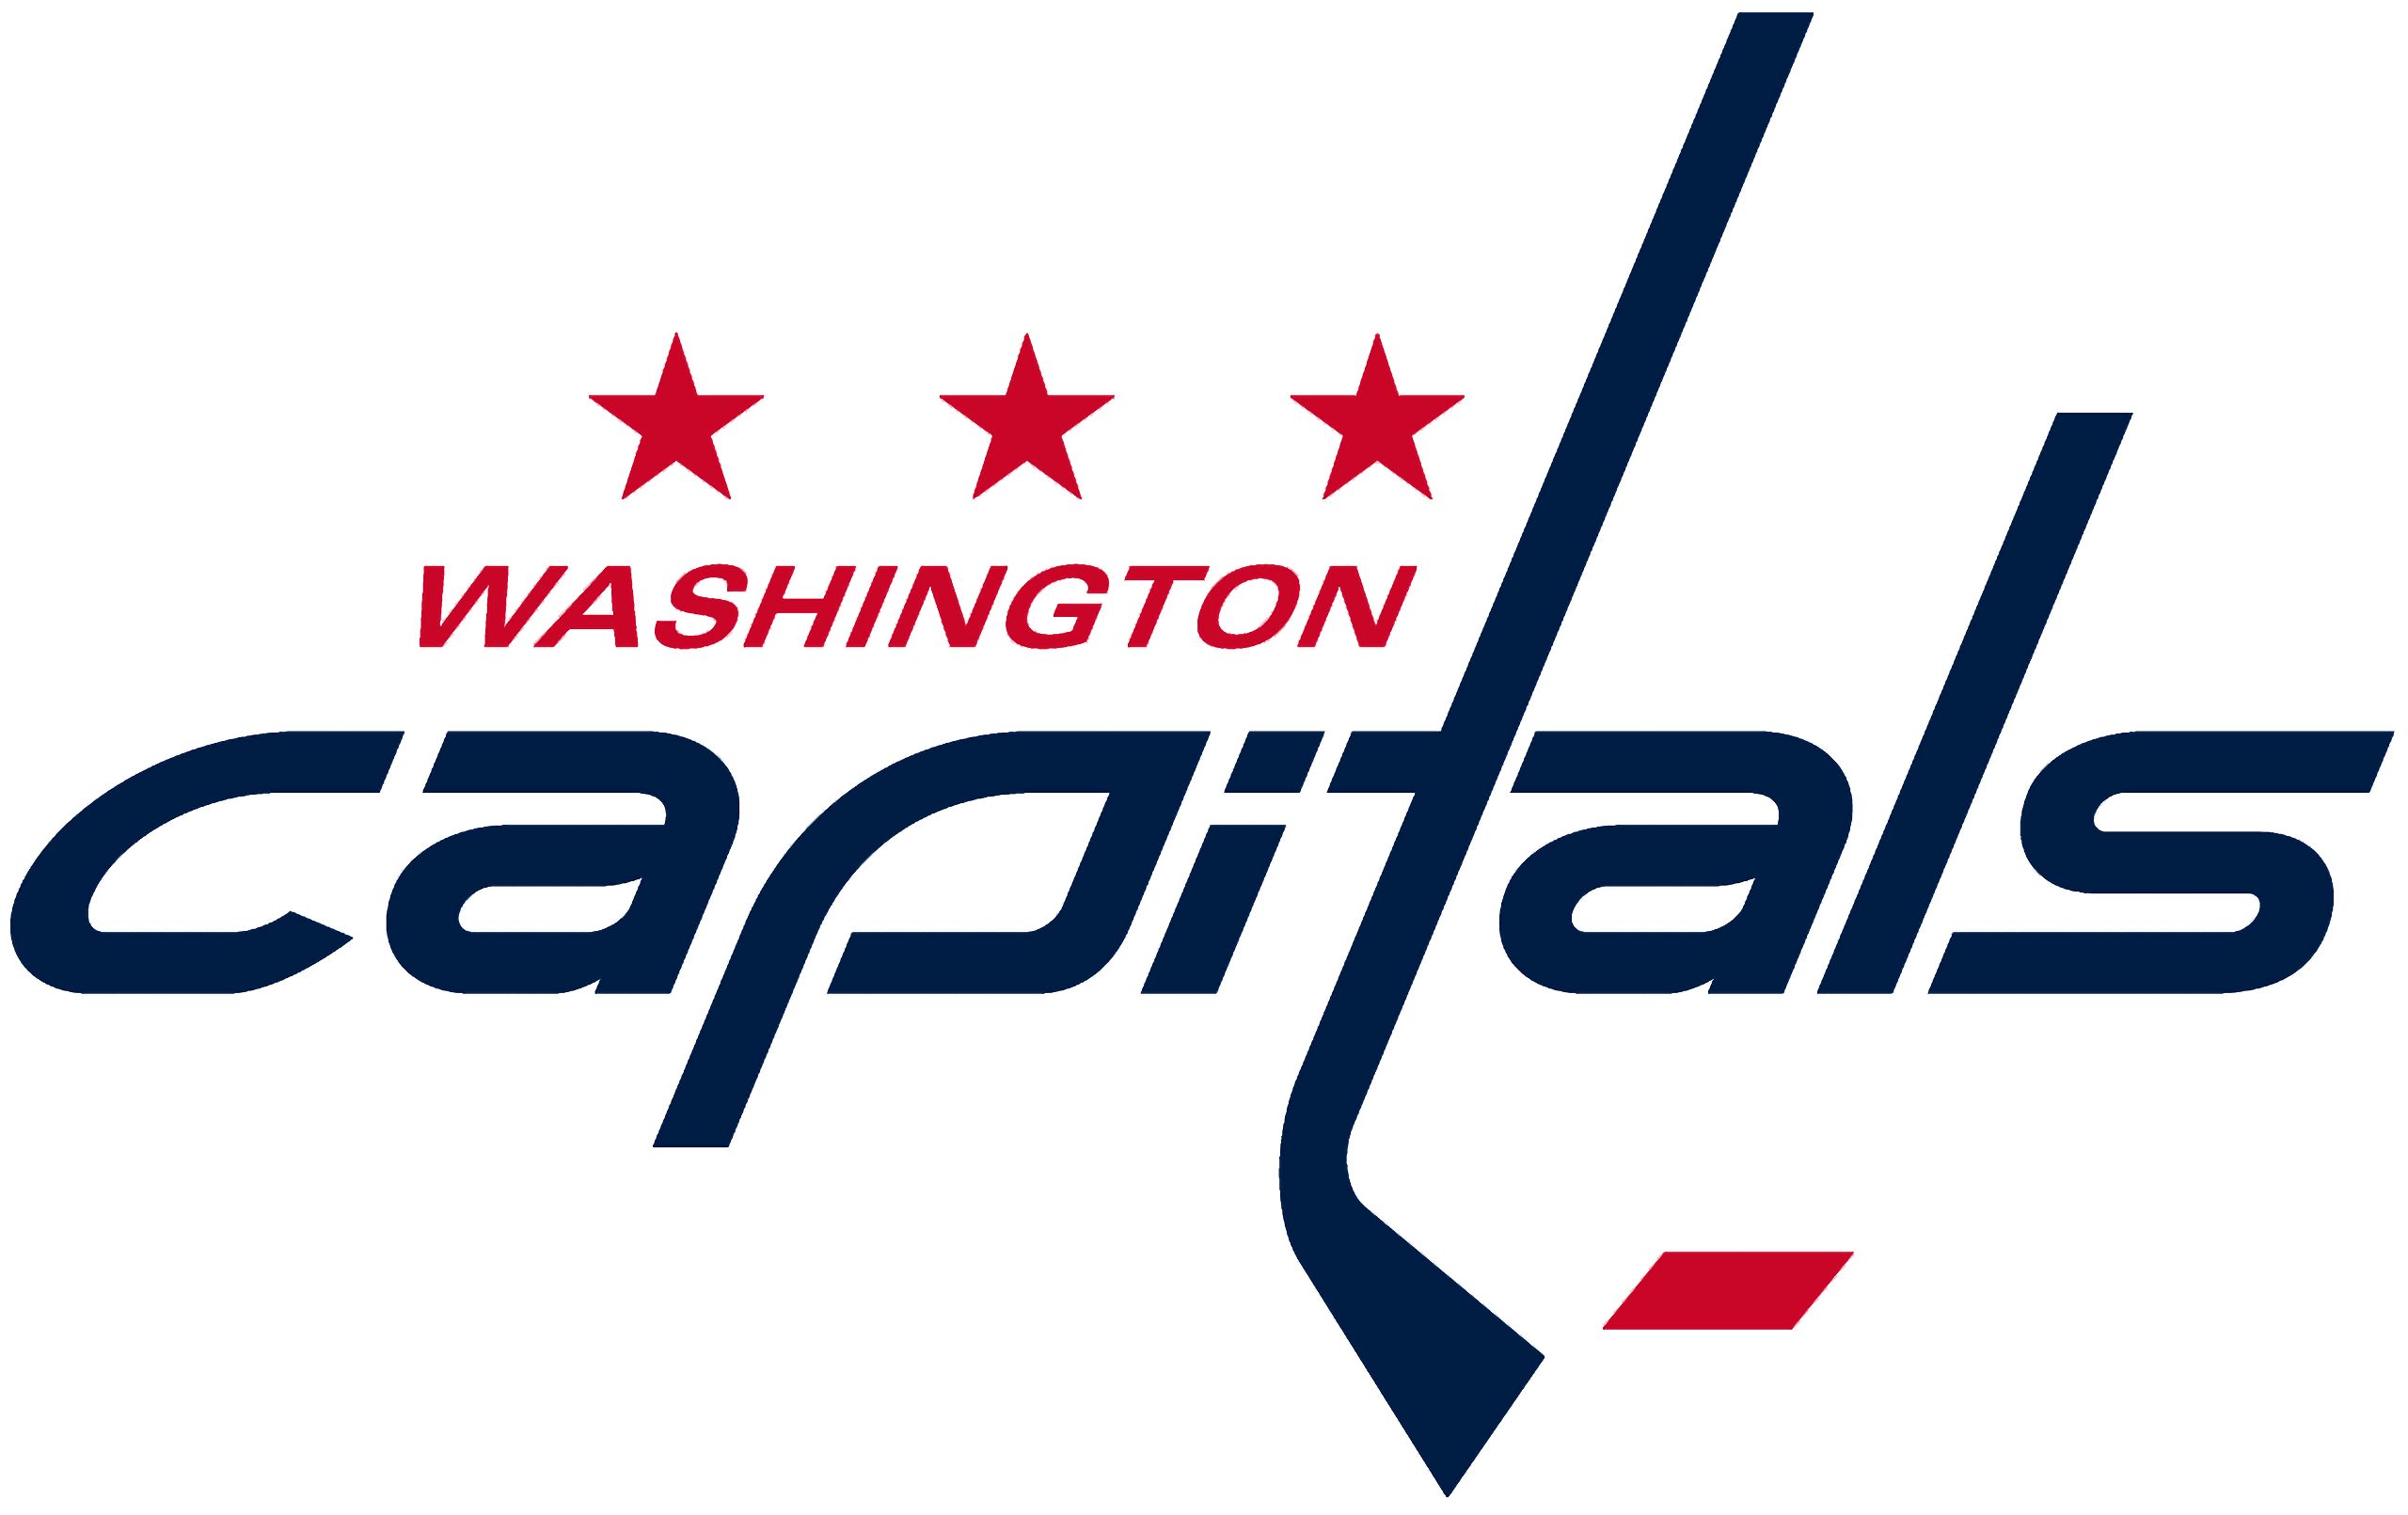 Washington Capitals Wallpaper APK for Android Download